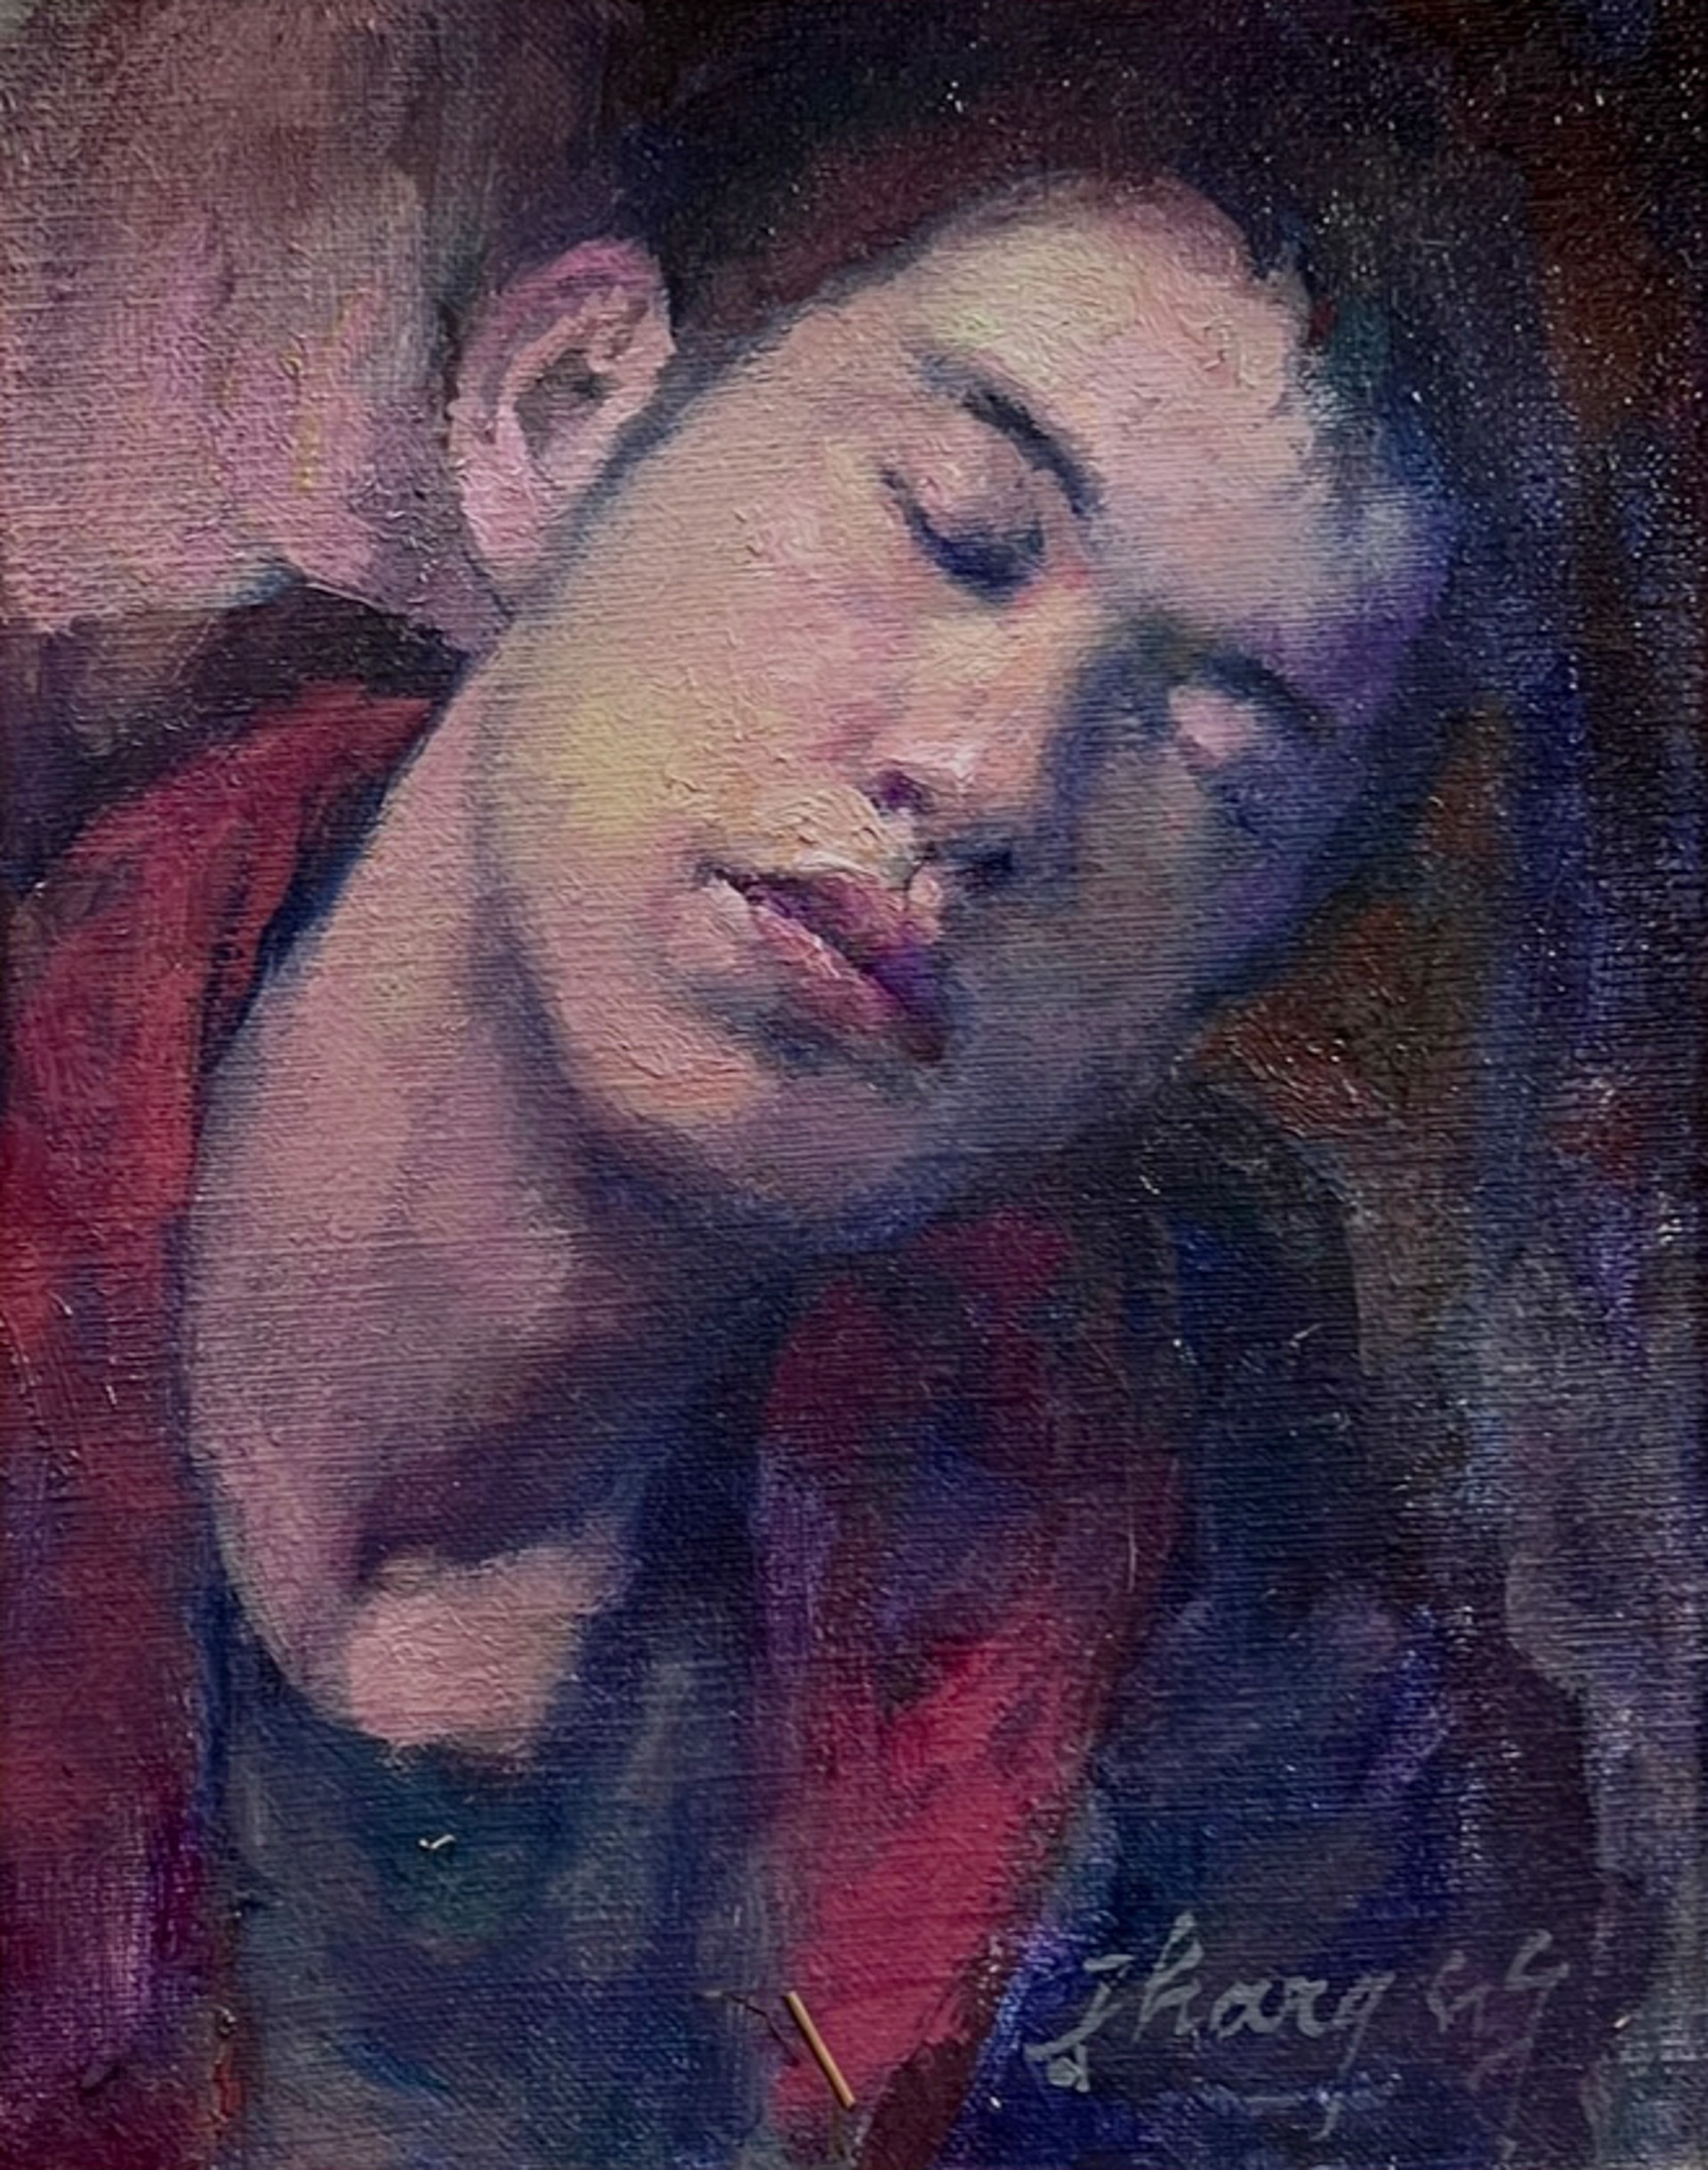 Sleeping Man (Study for Dreaming in the Subway) by Hongnian Zhang